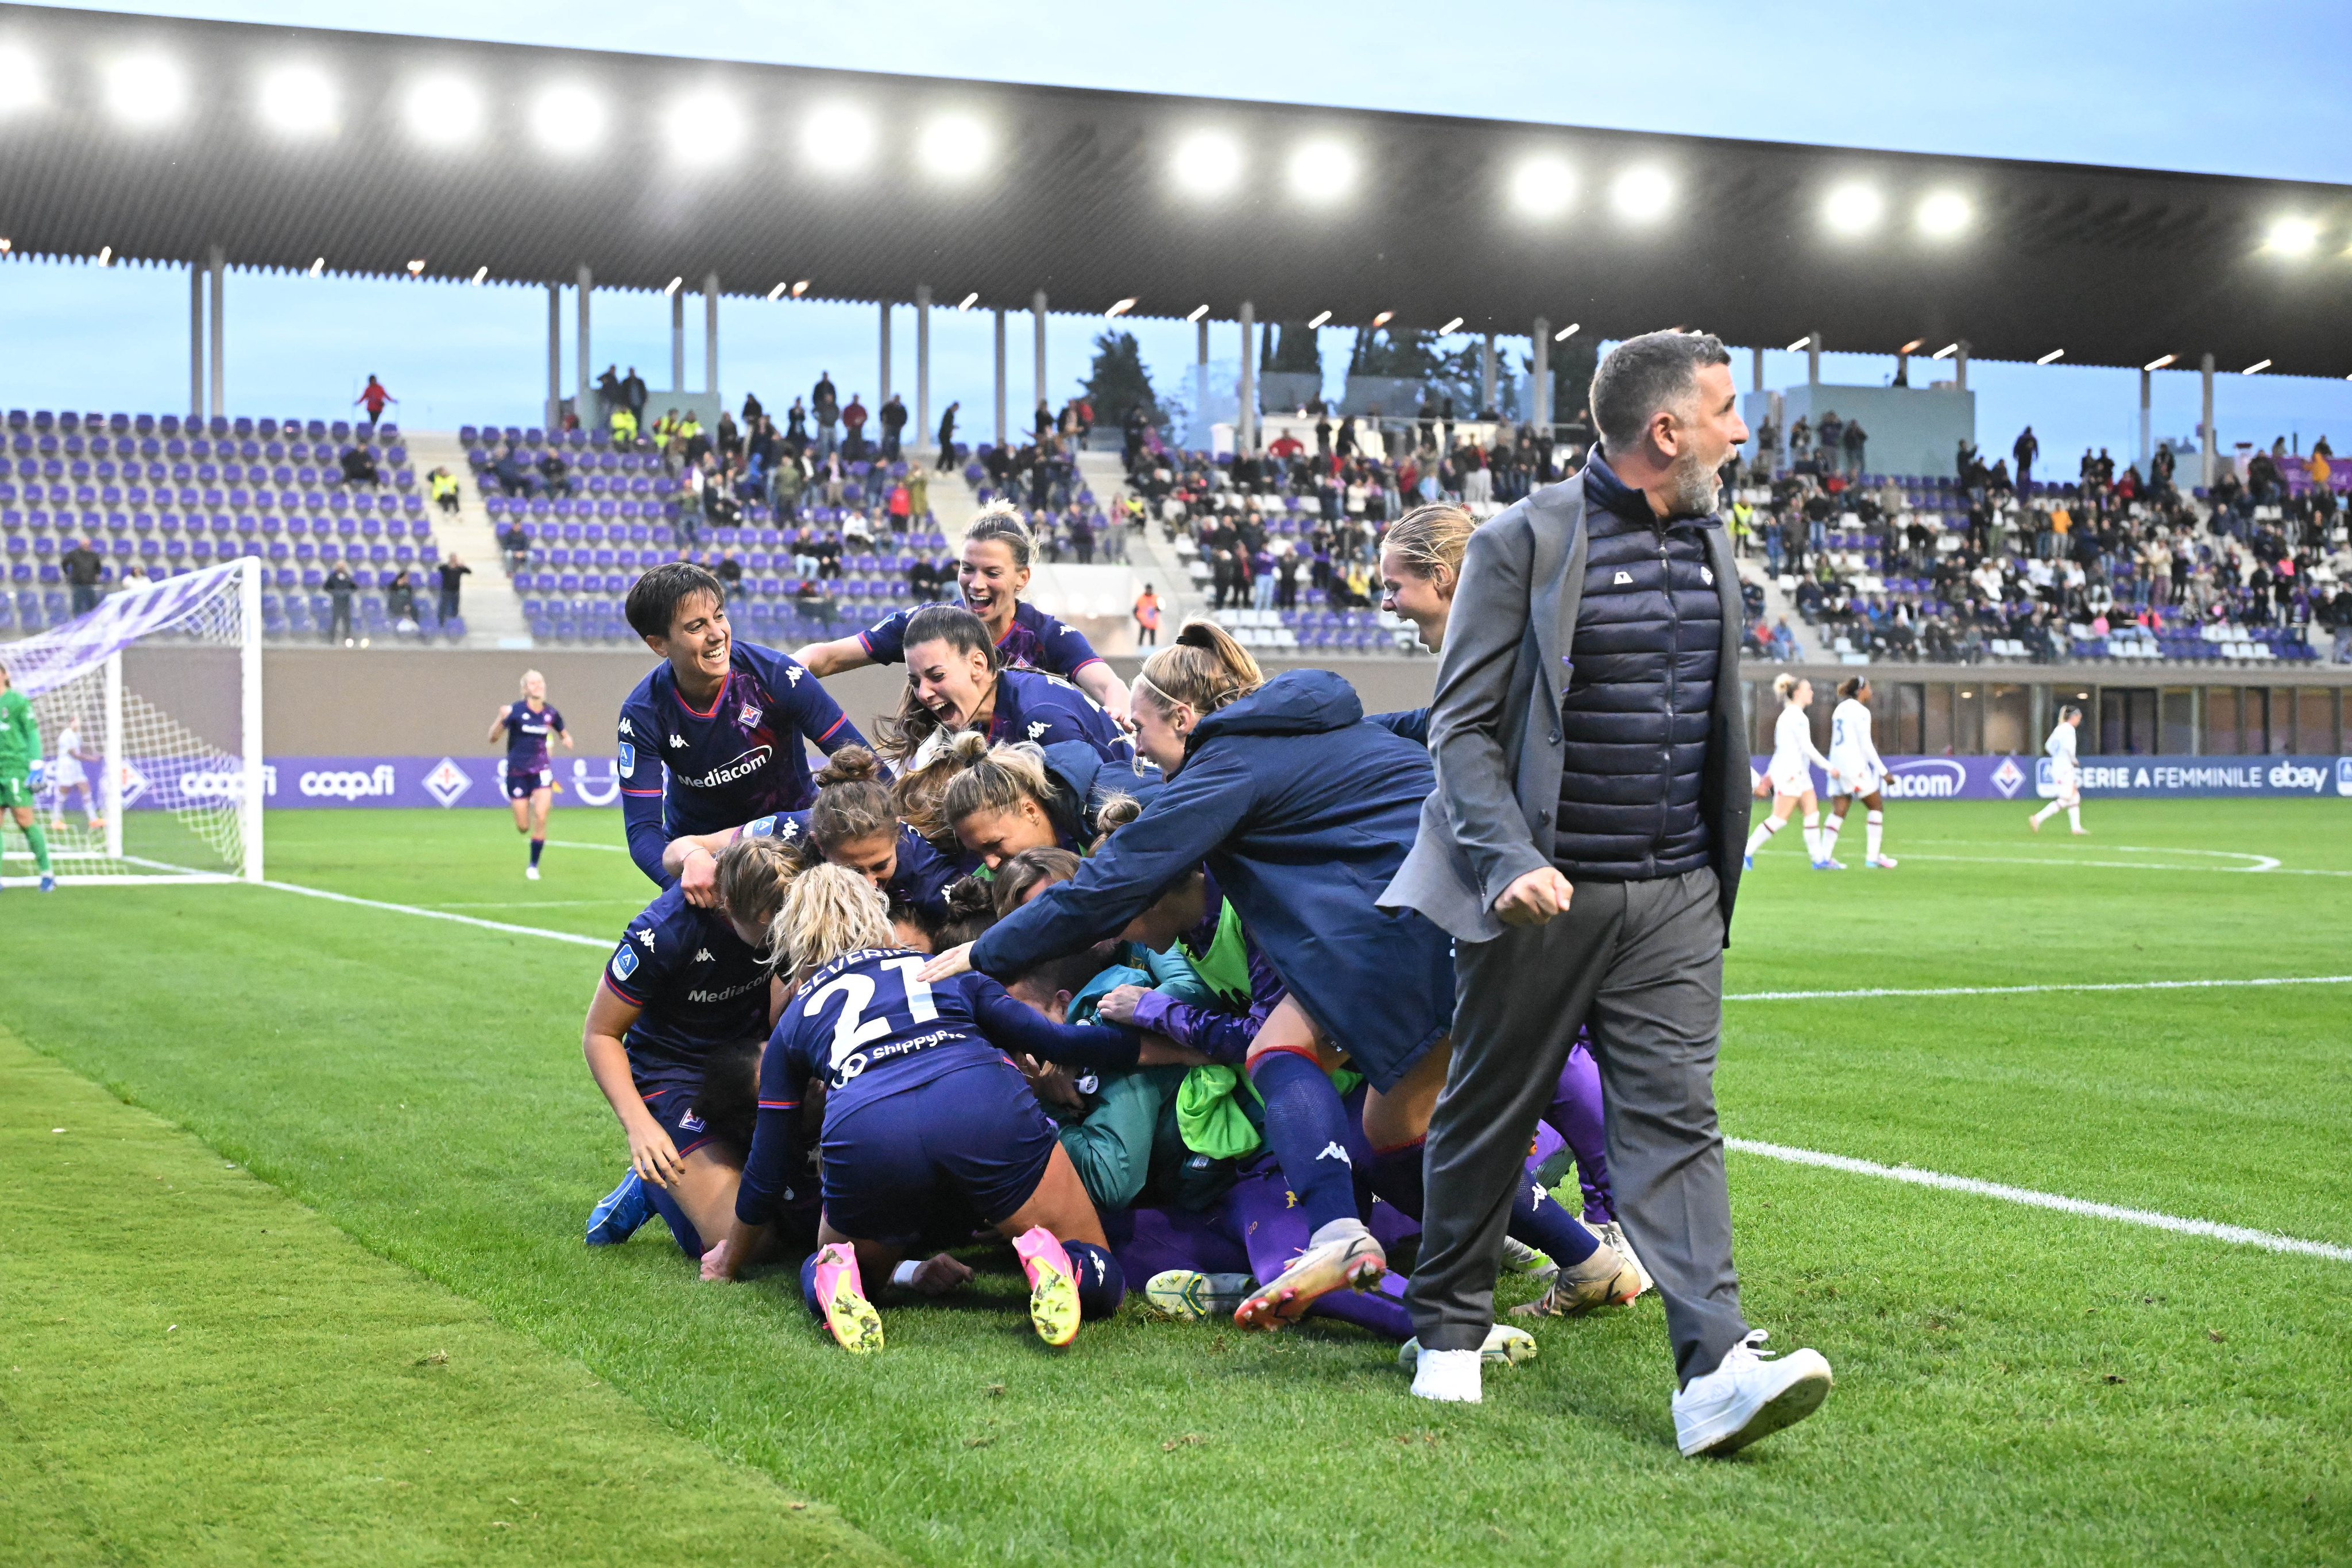 Academia Acf Fiorentina Femminile Vs San Marino Fotografia Editorial -  Imagem de campo, campeonato: 207851432